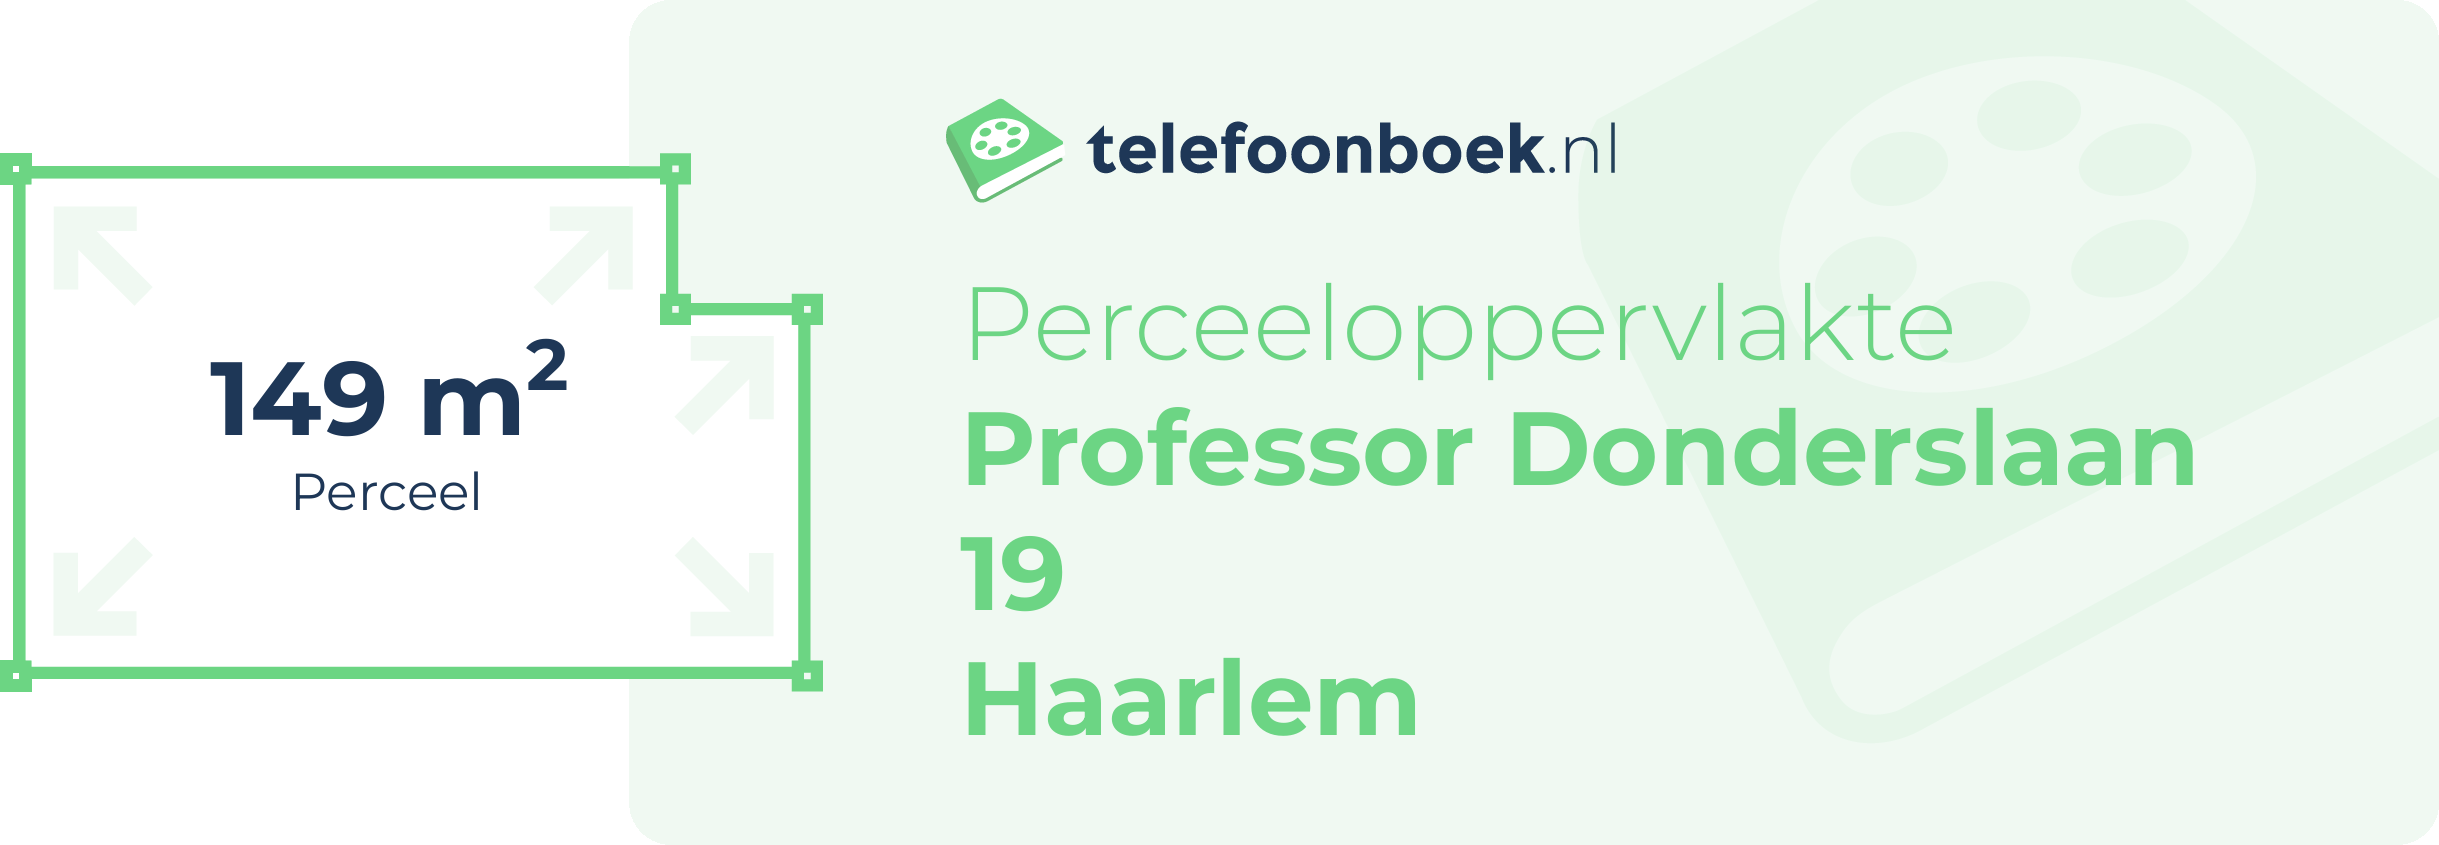 Perceeloppervlakte Professor Donderslaan 19 Haarlem